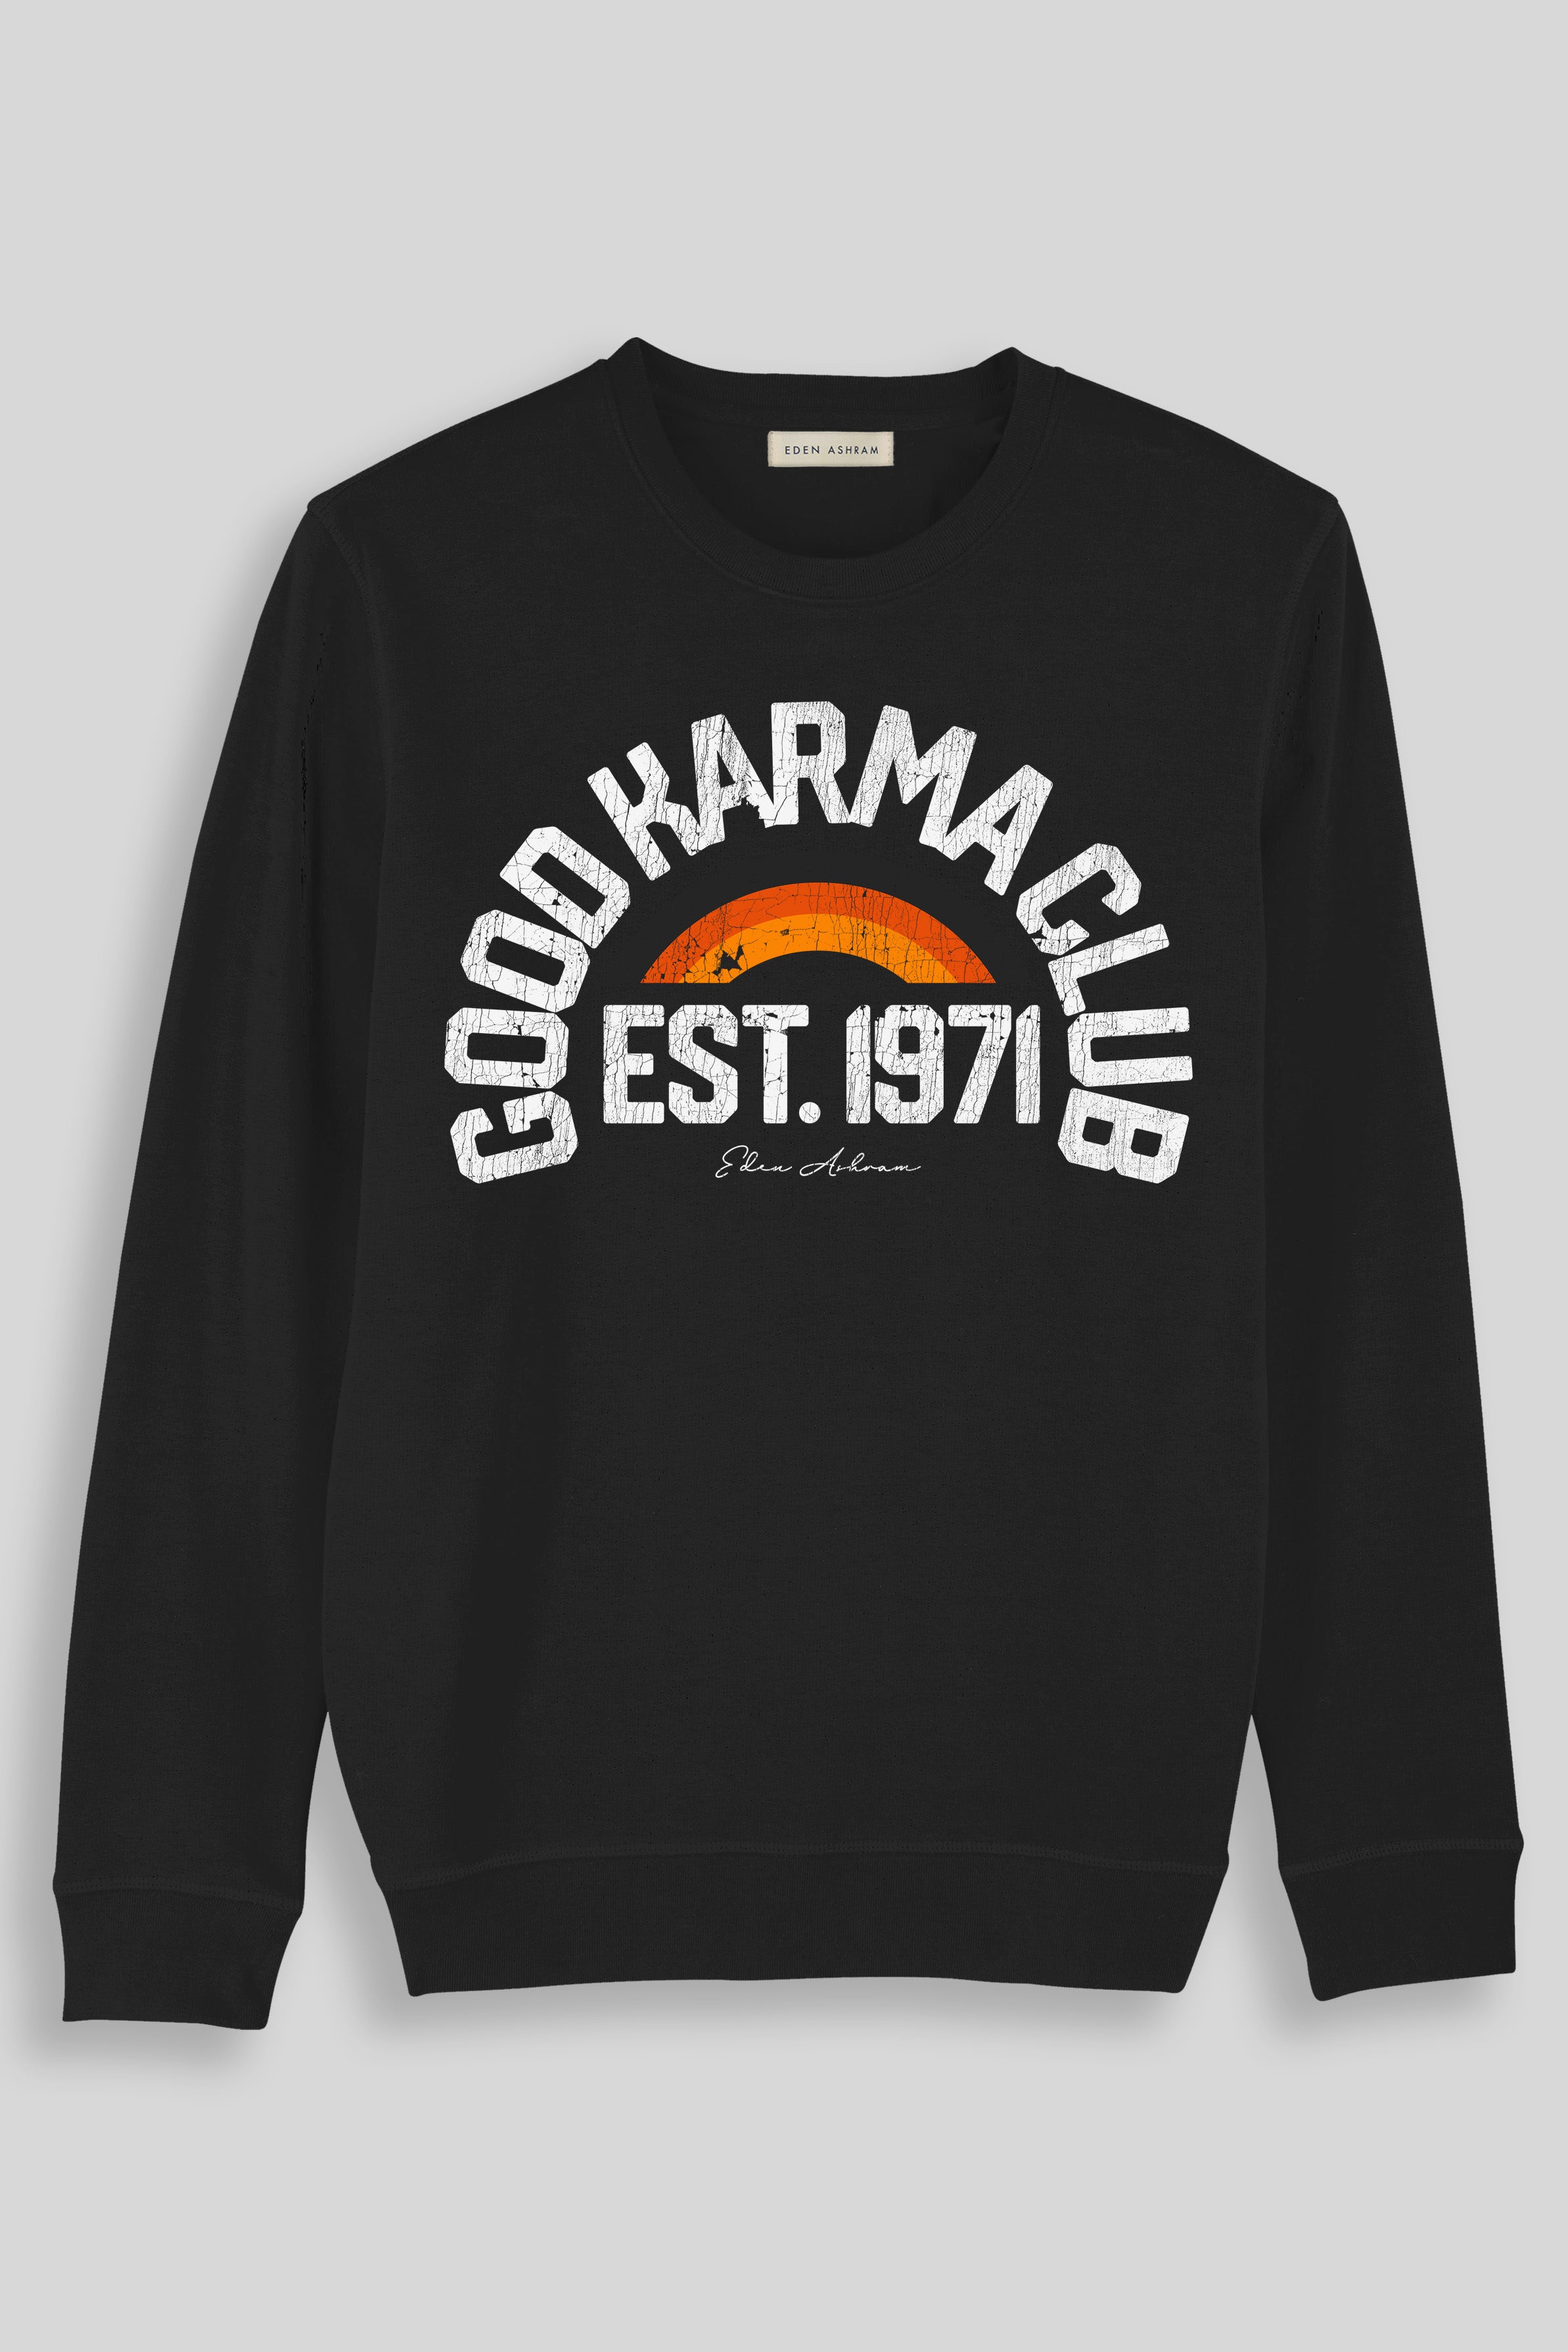 EDEN ASHRAM Good Karma Club Premium Crew Neck Sweatshirt Black